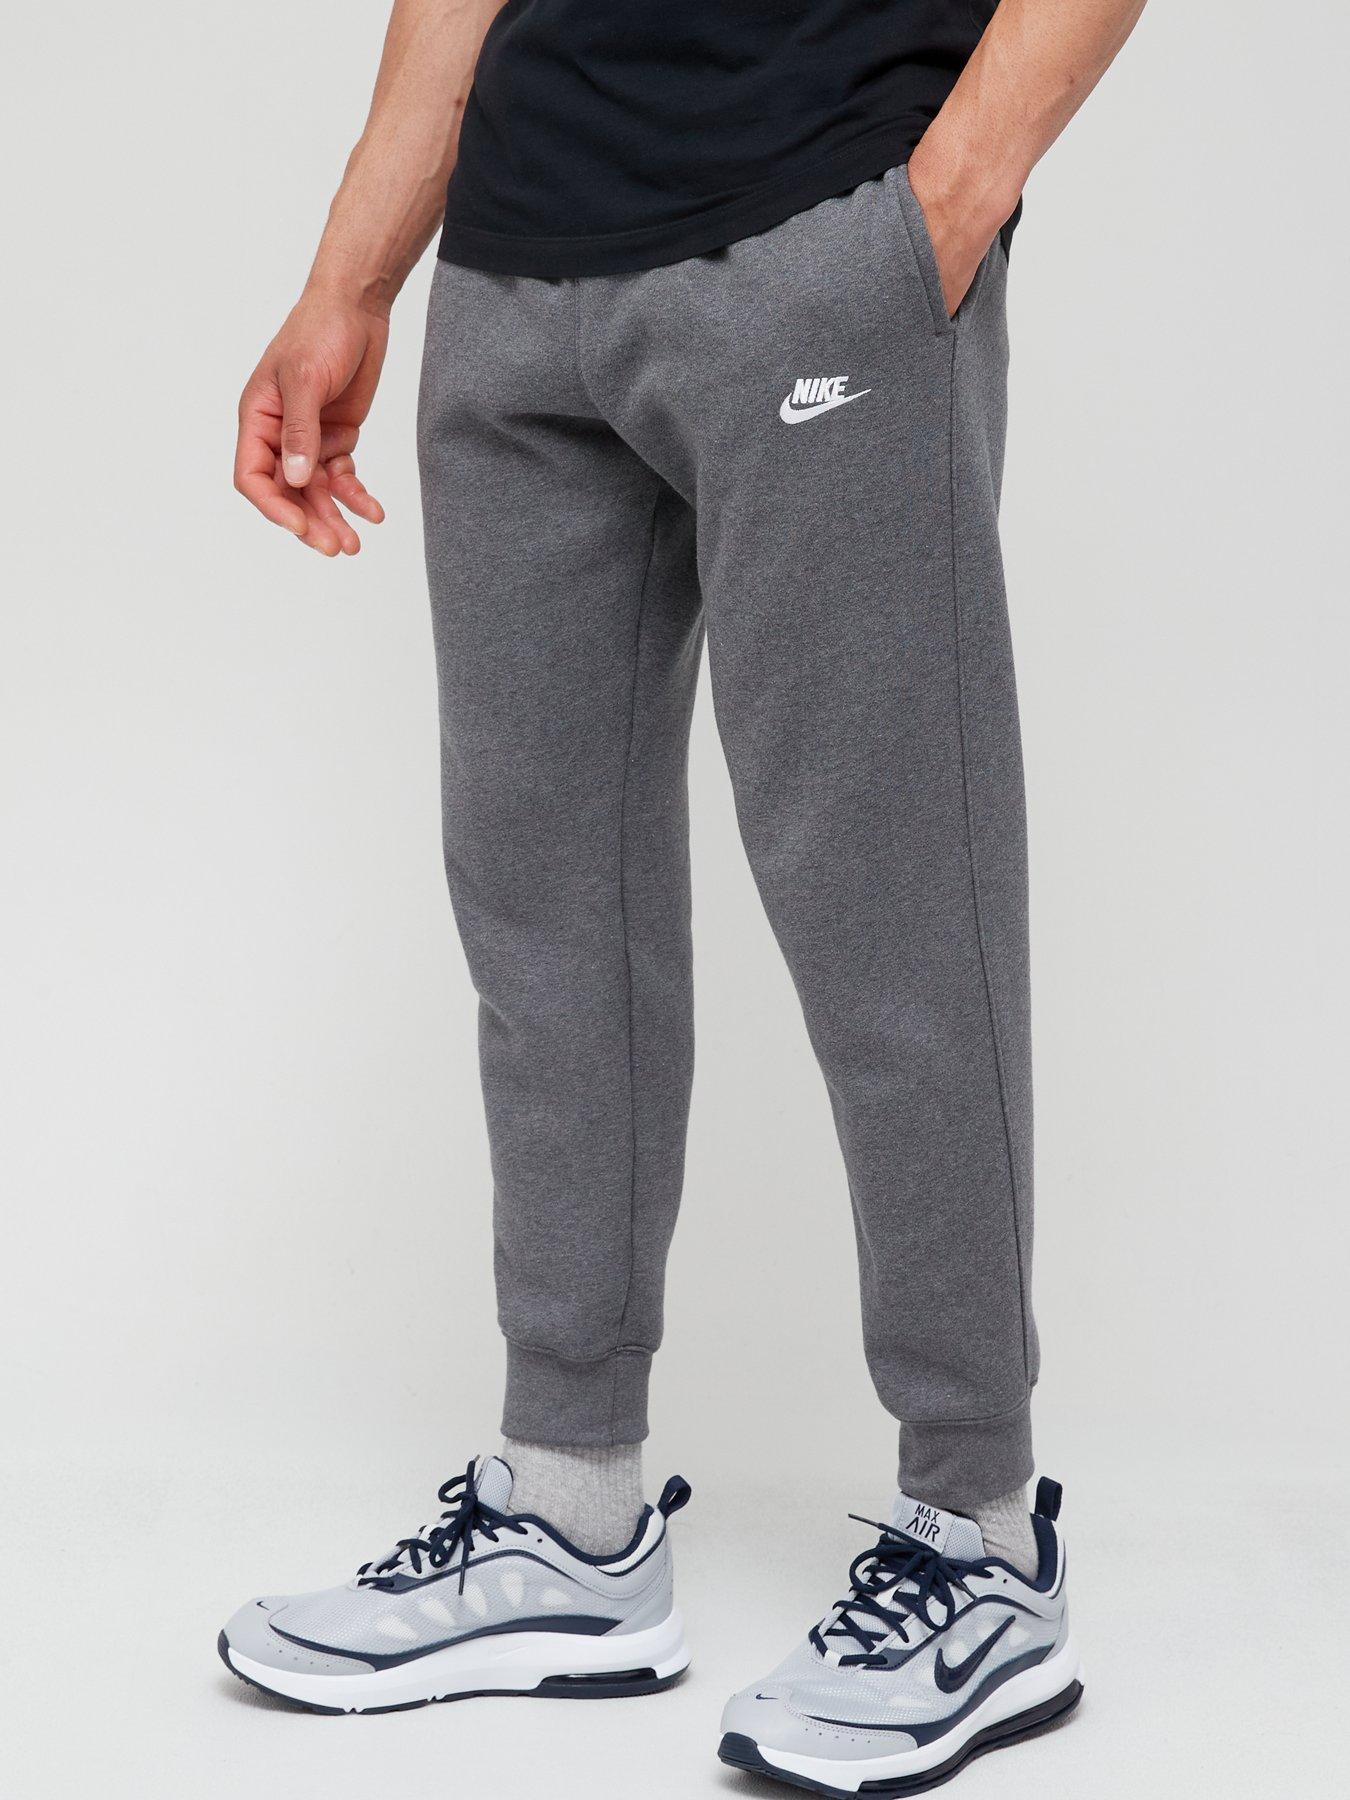 Men's Nike Joggers | Jogging Bottoms | Very.co.uk